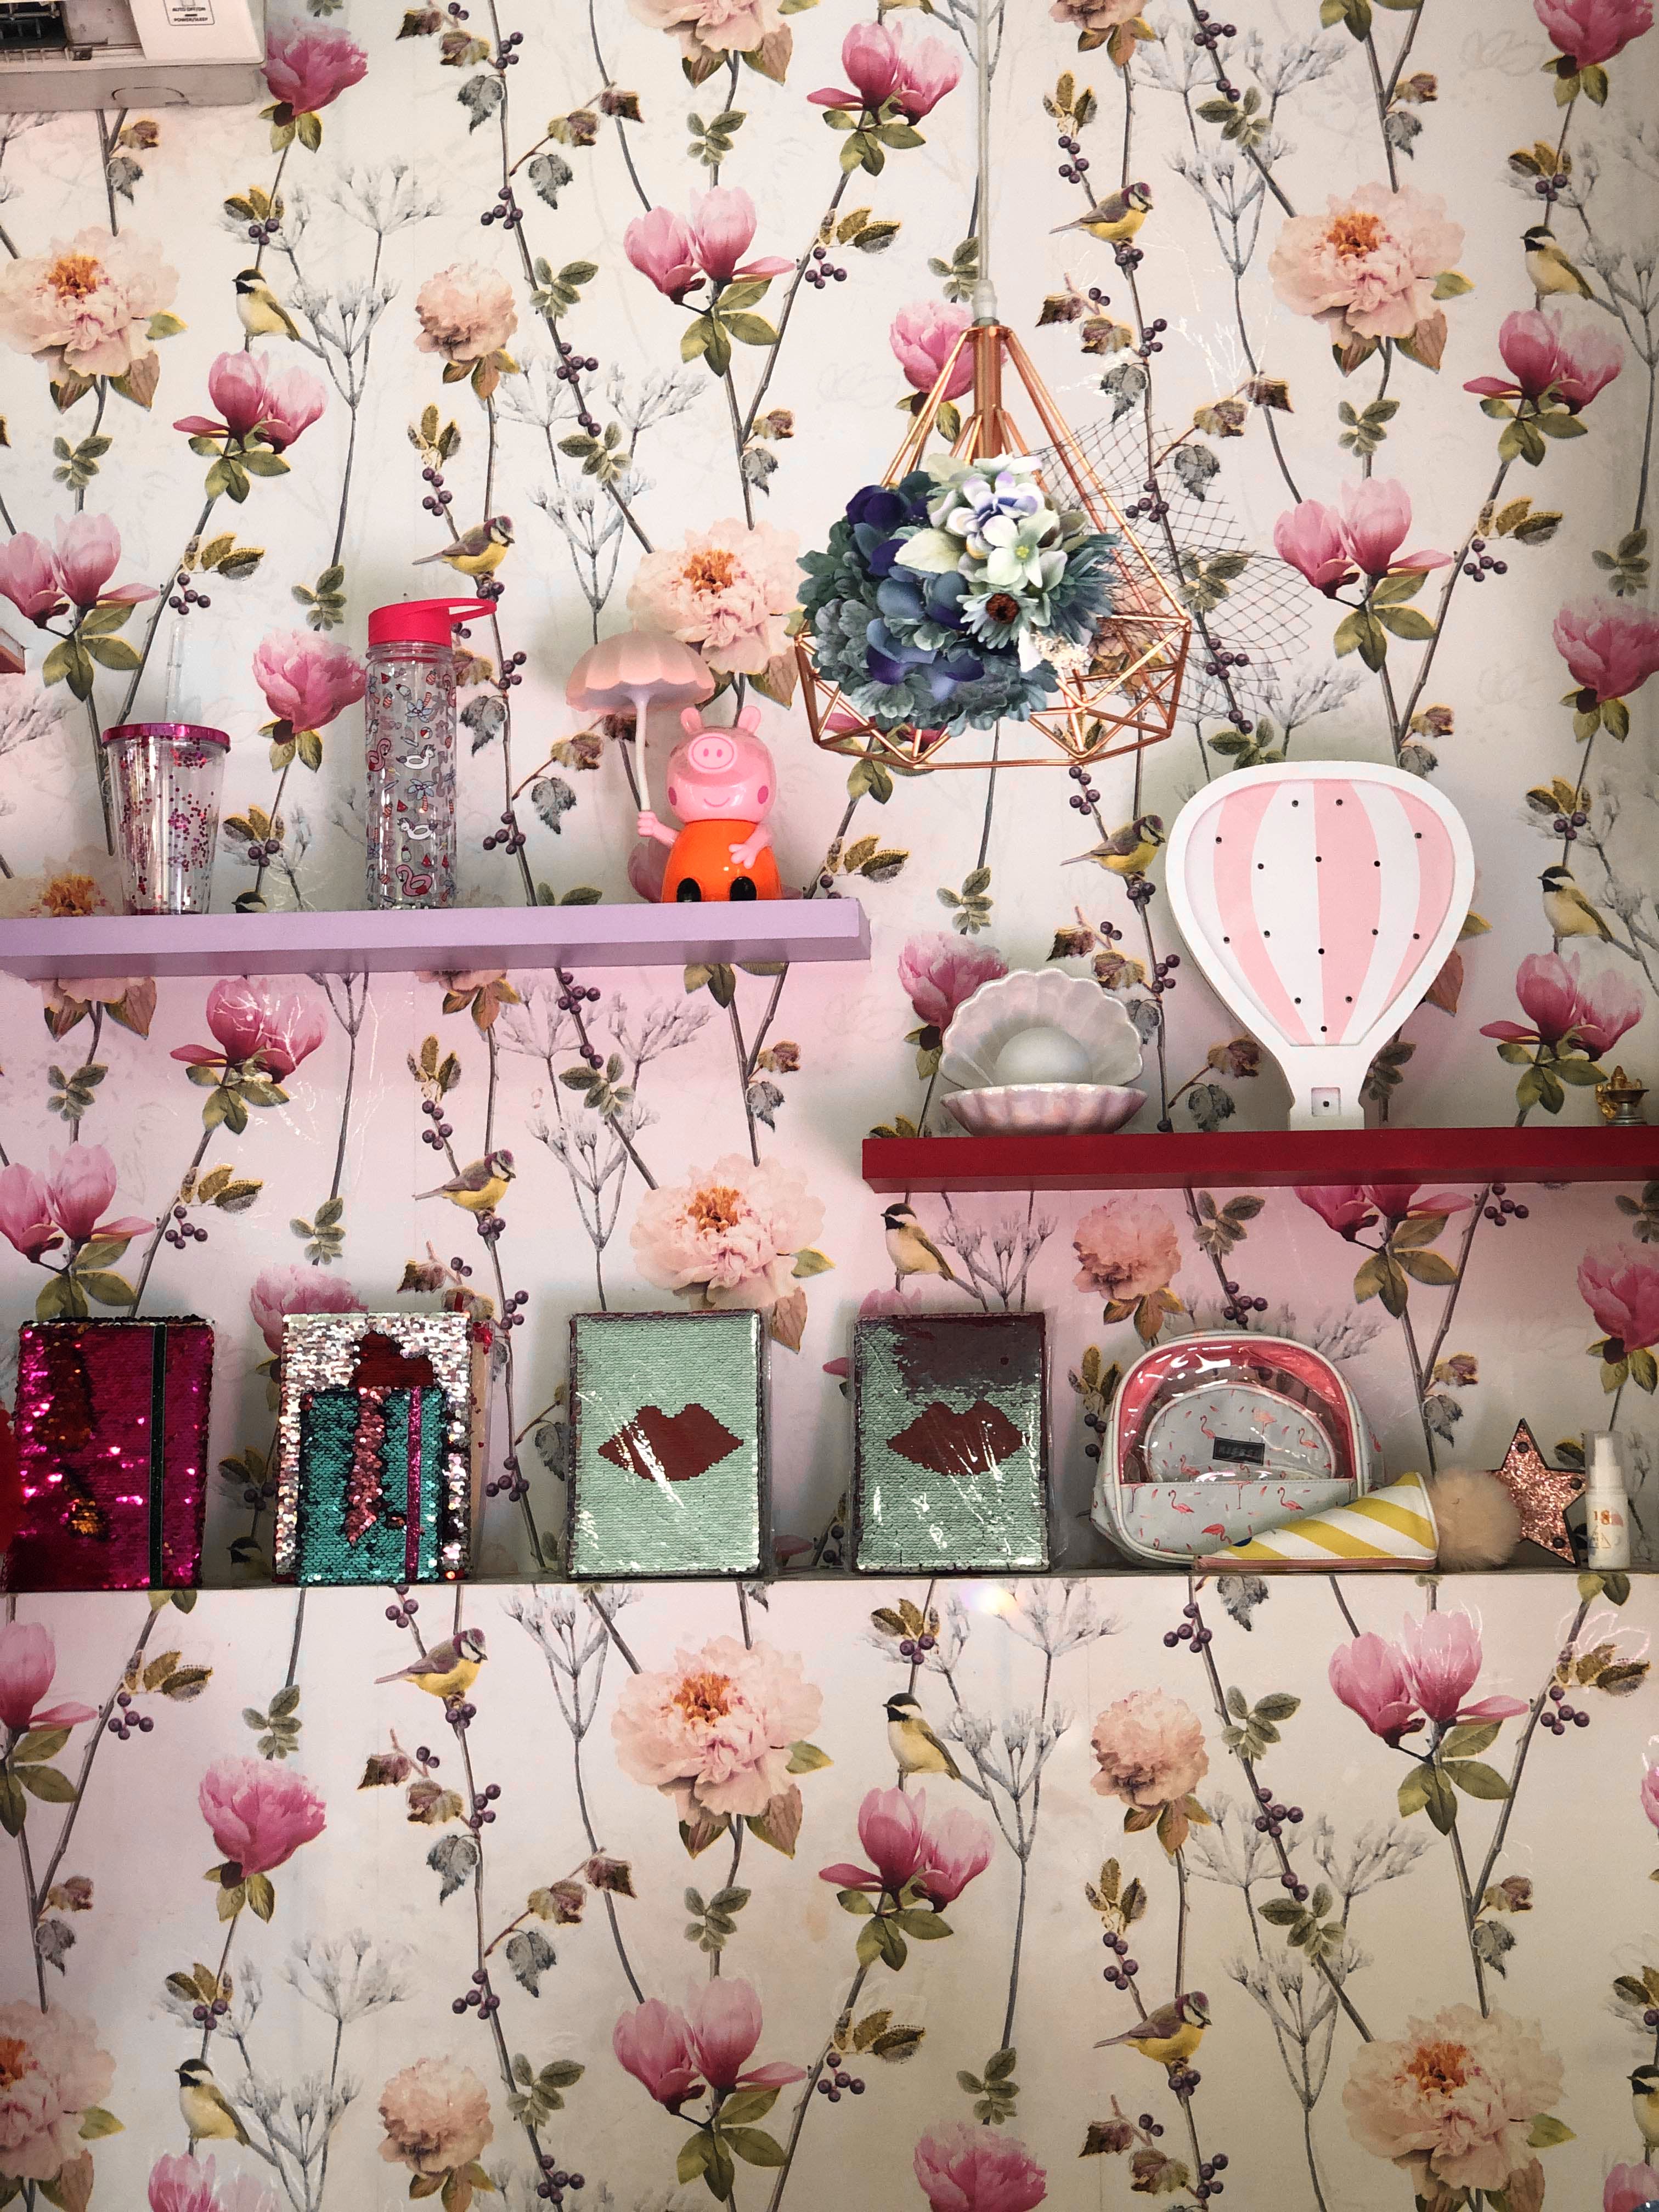 Pink,Spring,Flower,Plant,Pattern,Wallpaper,Floral design,Textile,Room,Wildflower